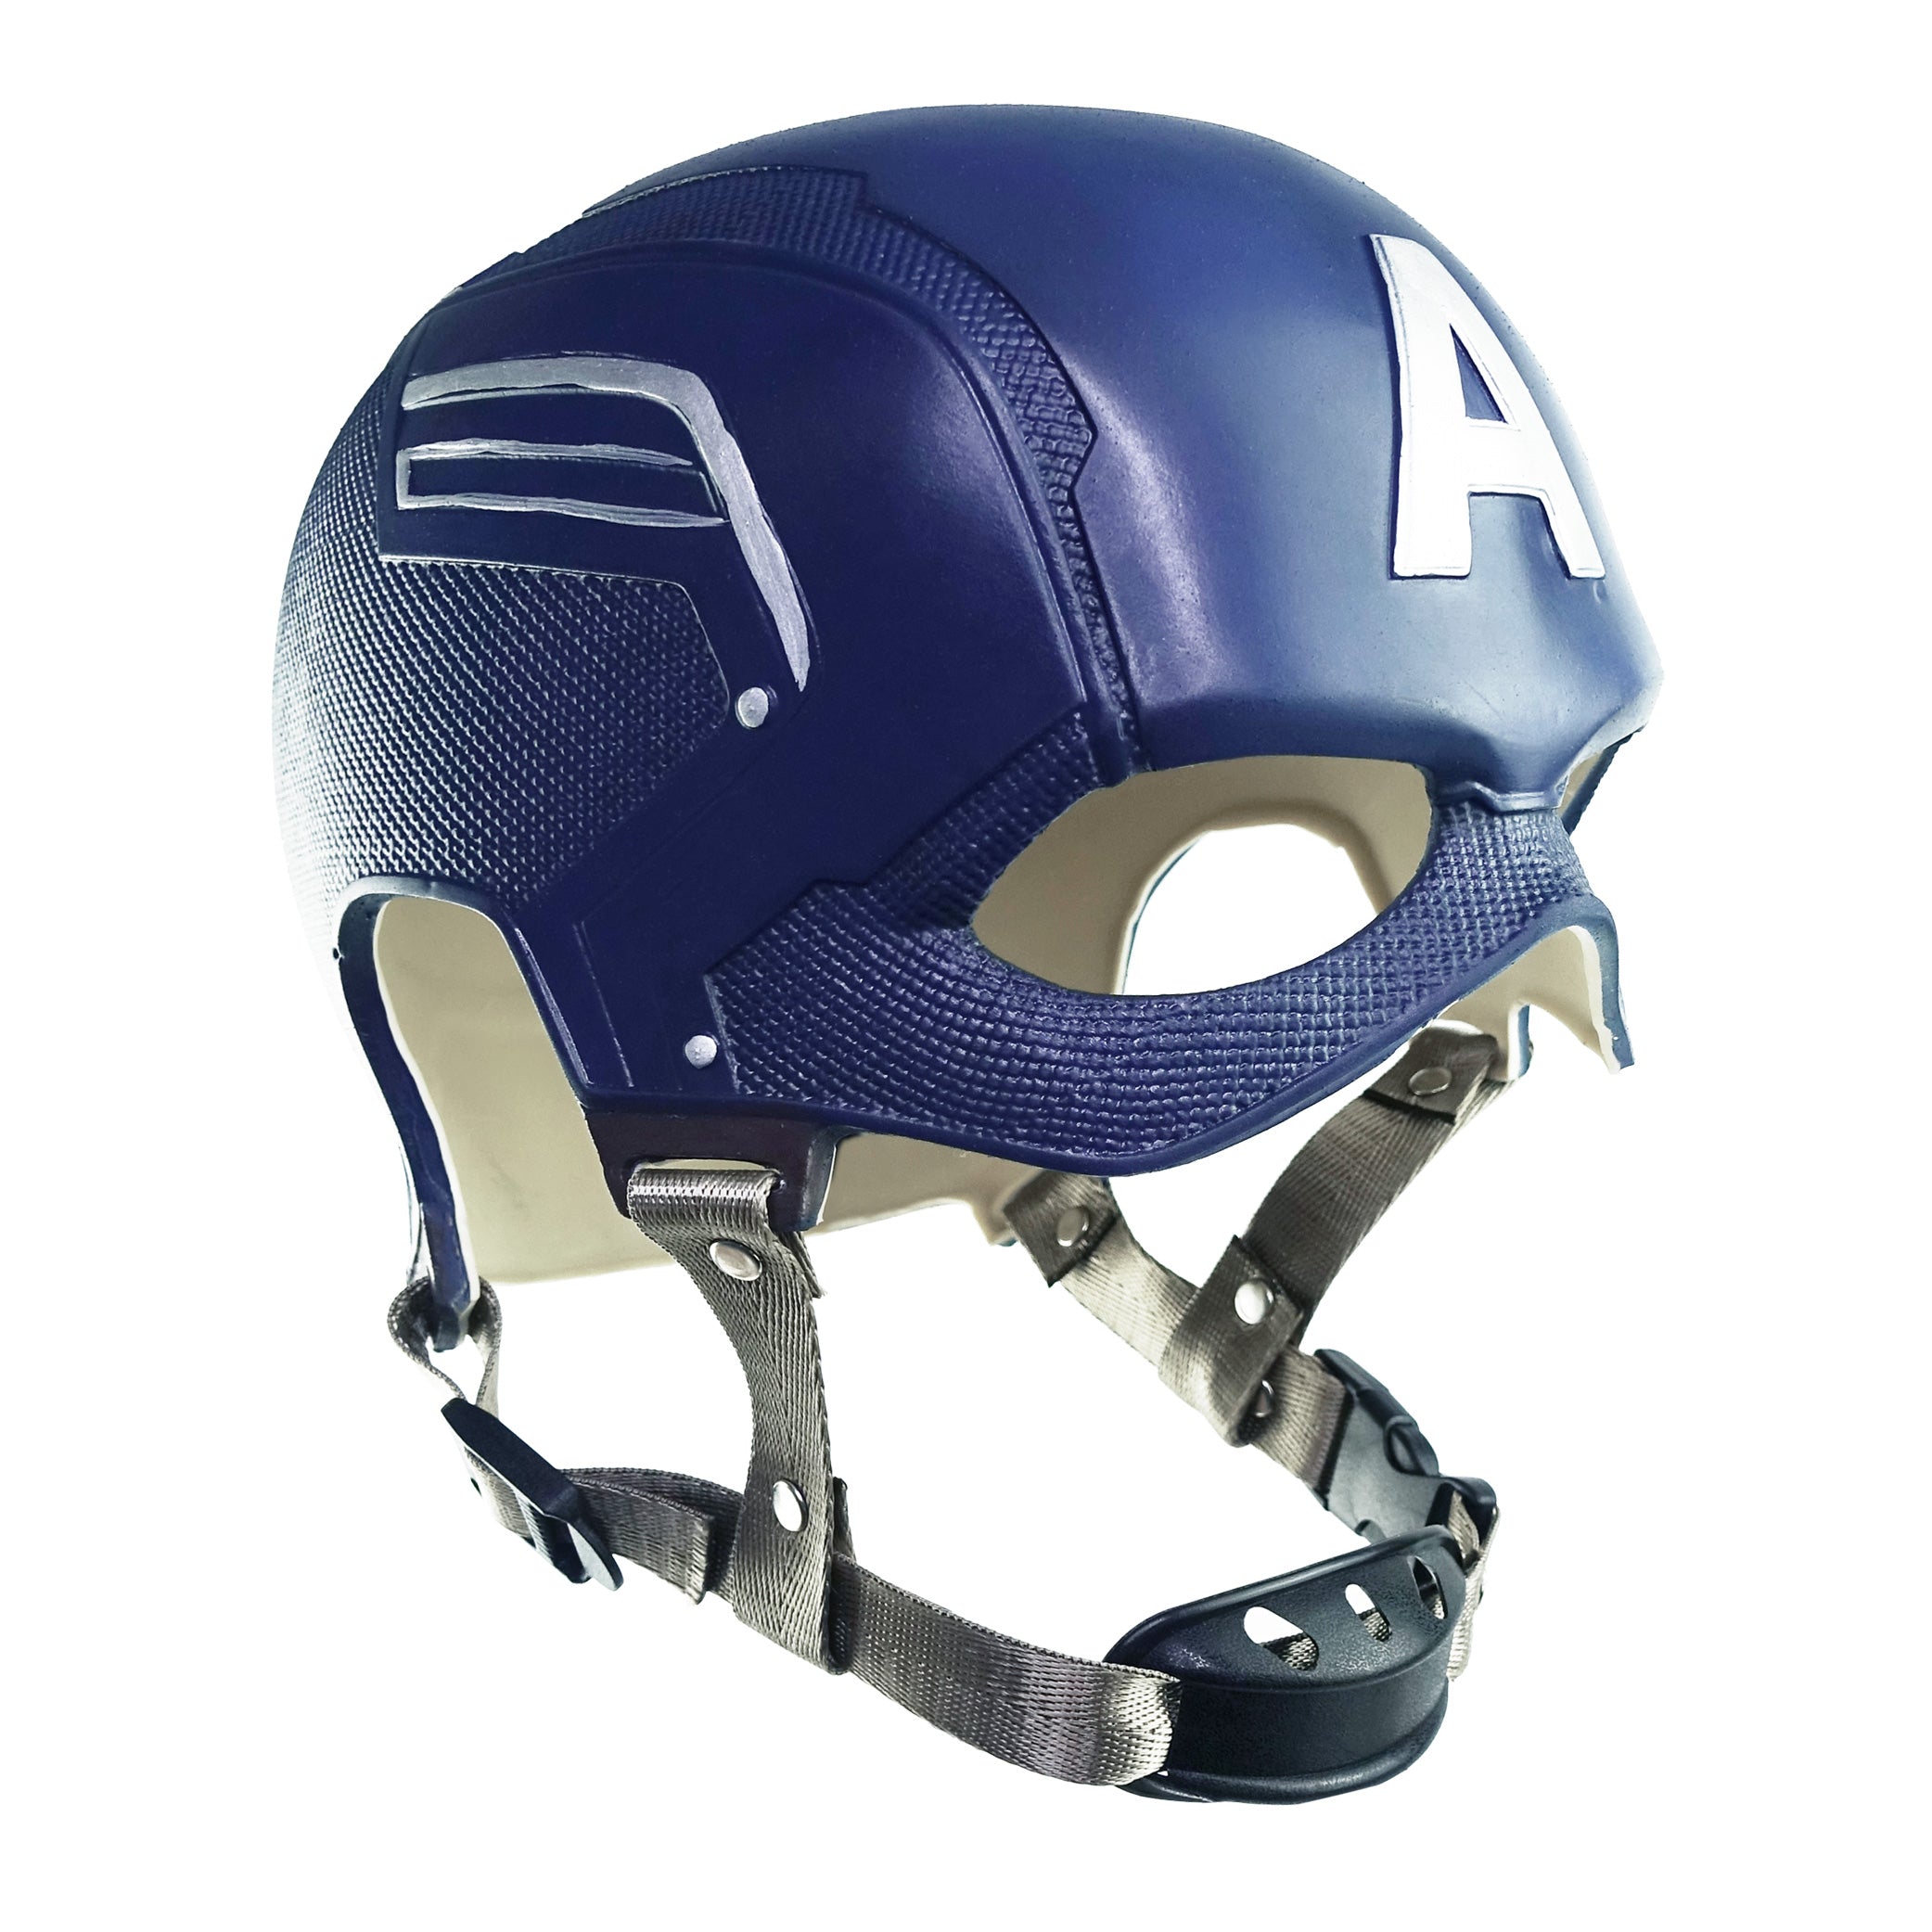 Captain America Mask Superhero Avengers Latex Cosplay for Adult Halloween Costume Accessory